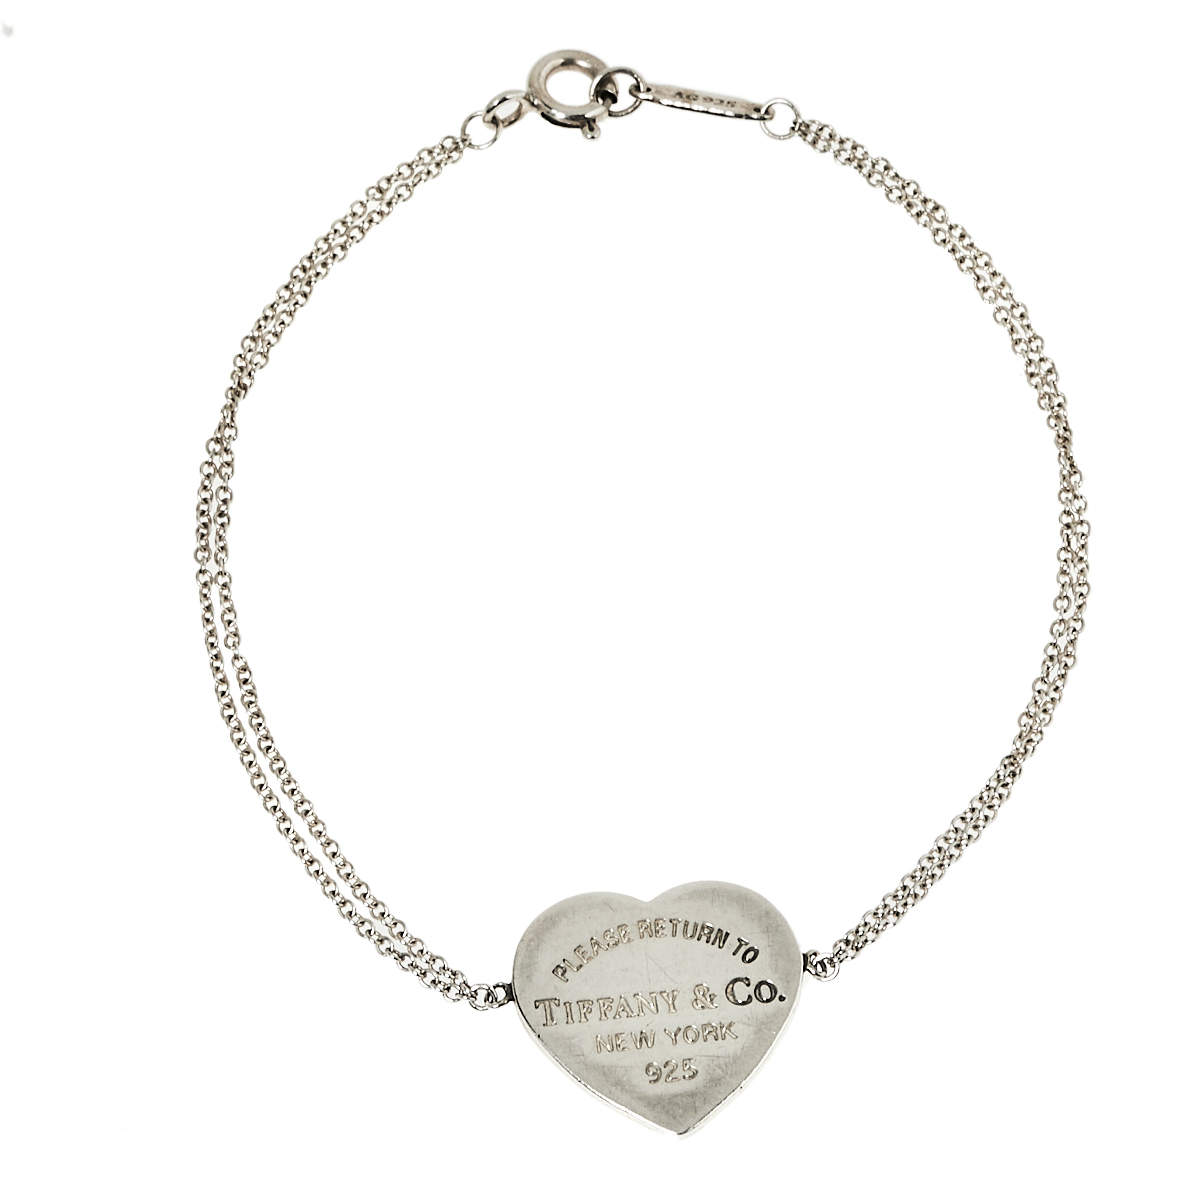 Tiffany & Co Silver I LOVE YOU Heart Bracelet Padlock Charm Bangle Gift  Pouch | Charm bangle, Heart bracelet, Silver charm bracelet